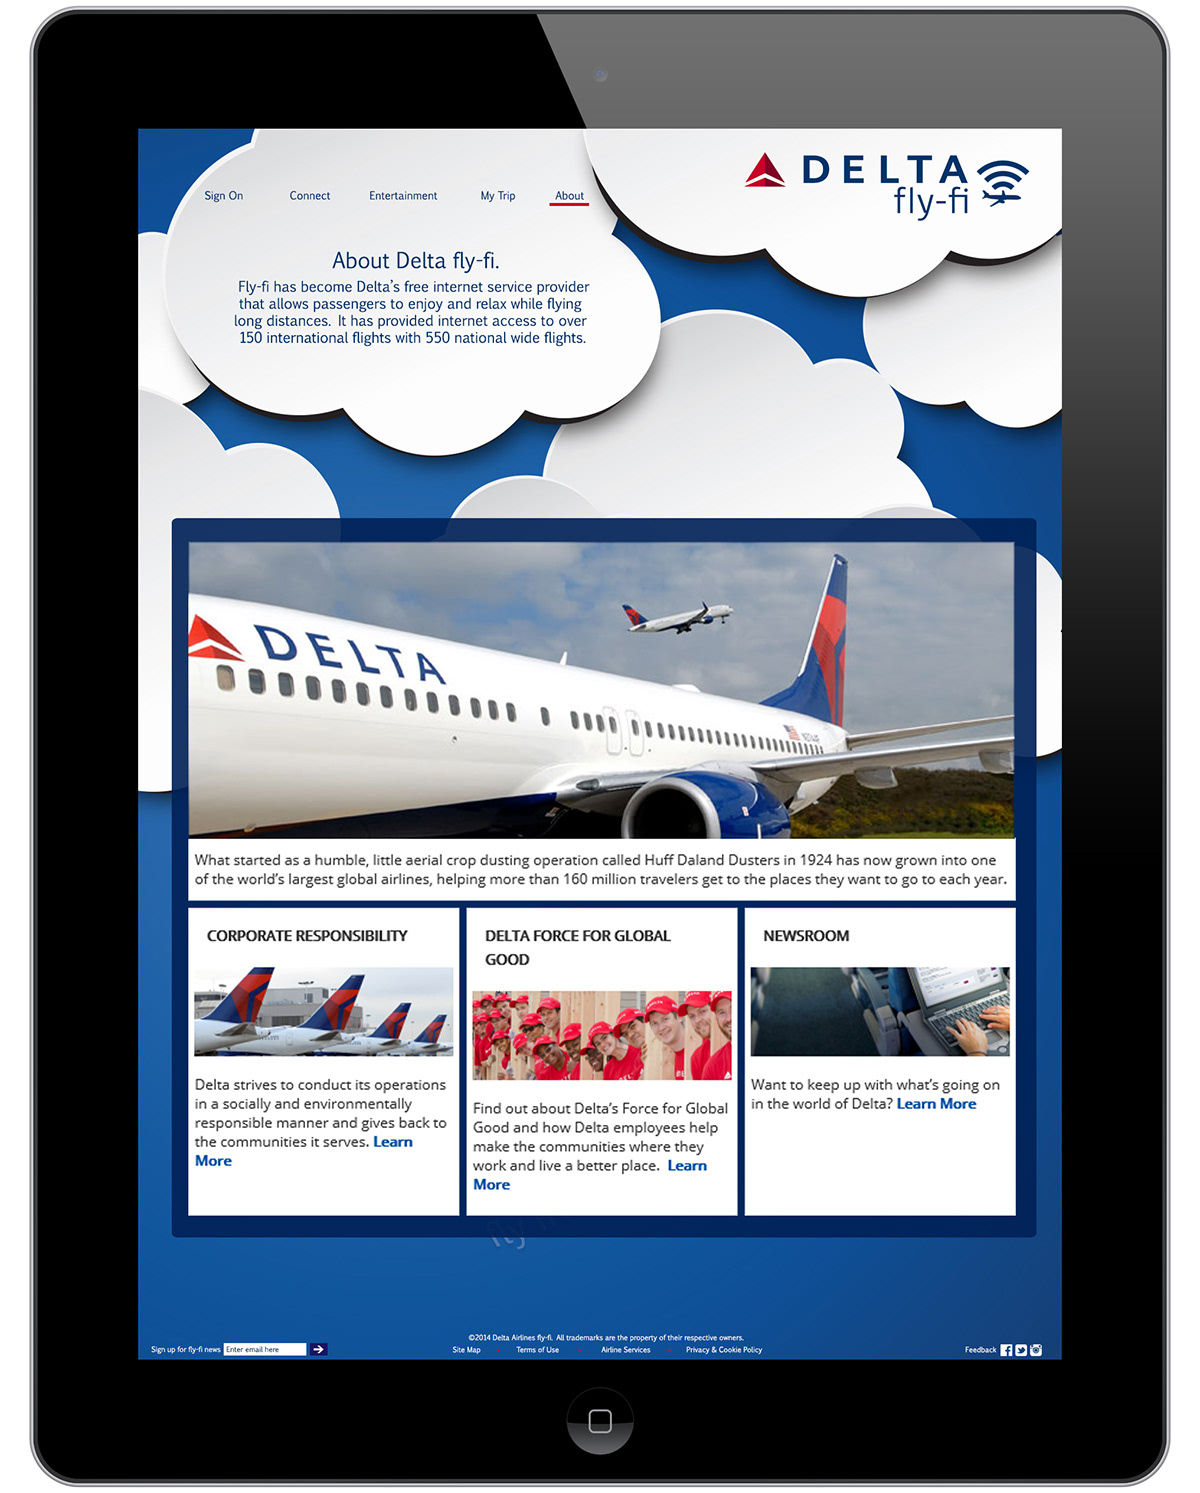 Delta Airlines Free WiFi flight plane logo fly-fi